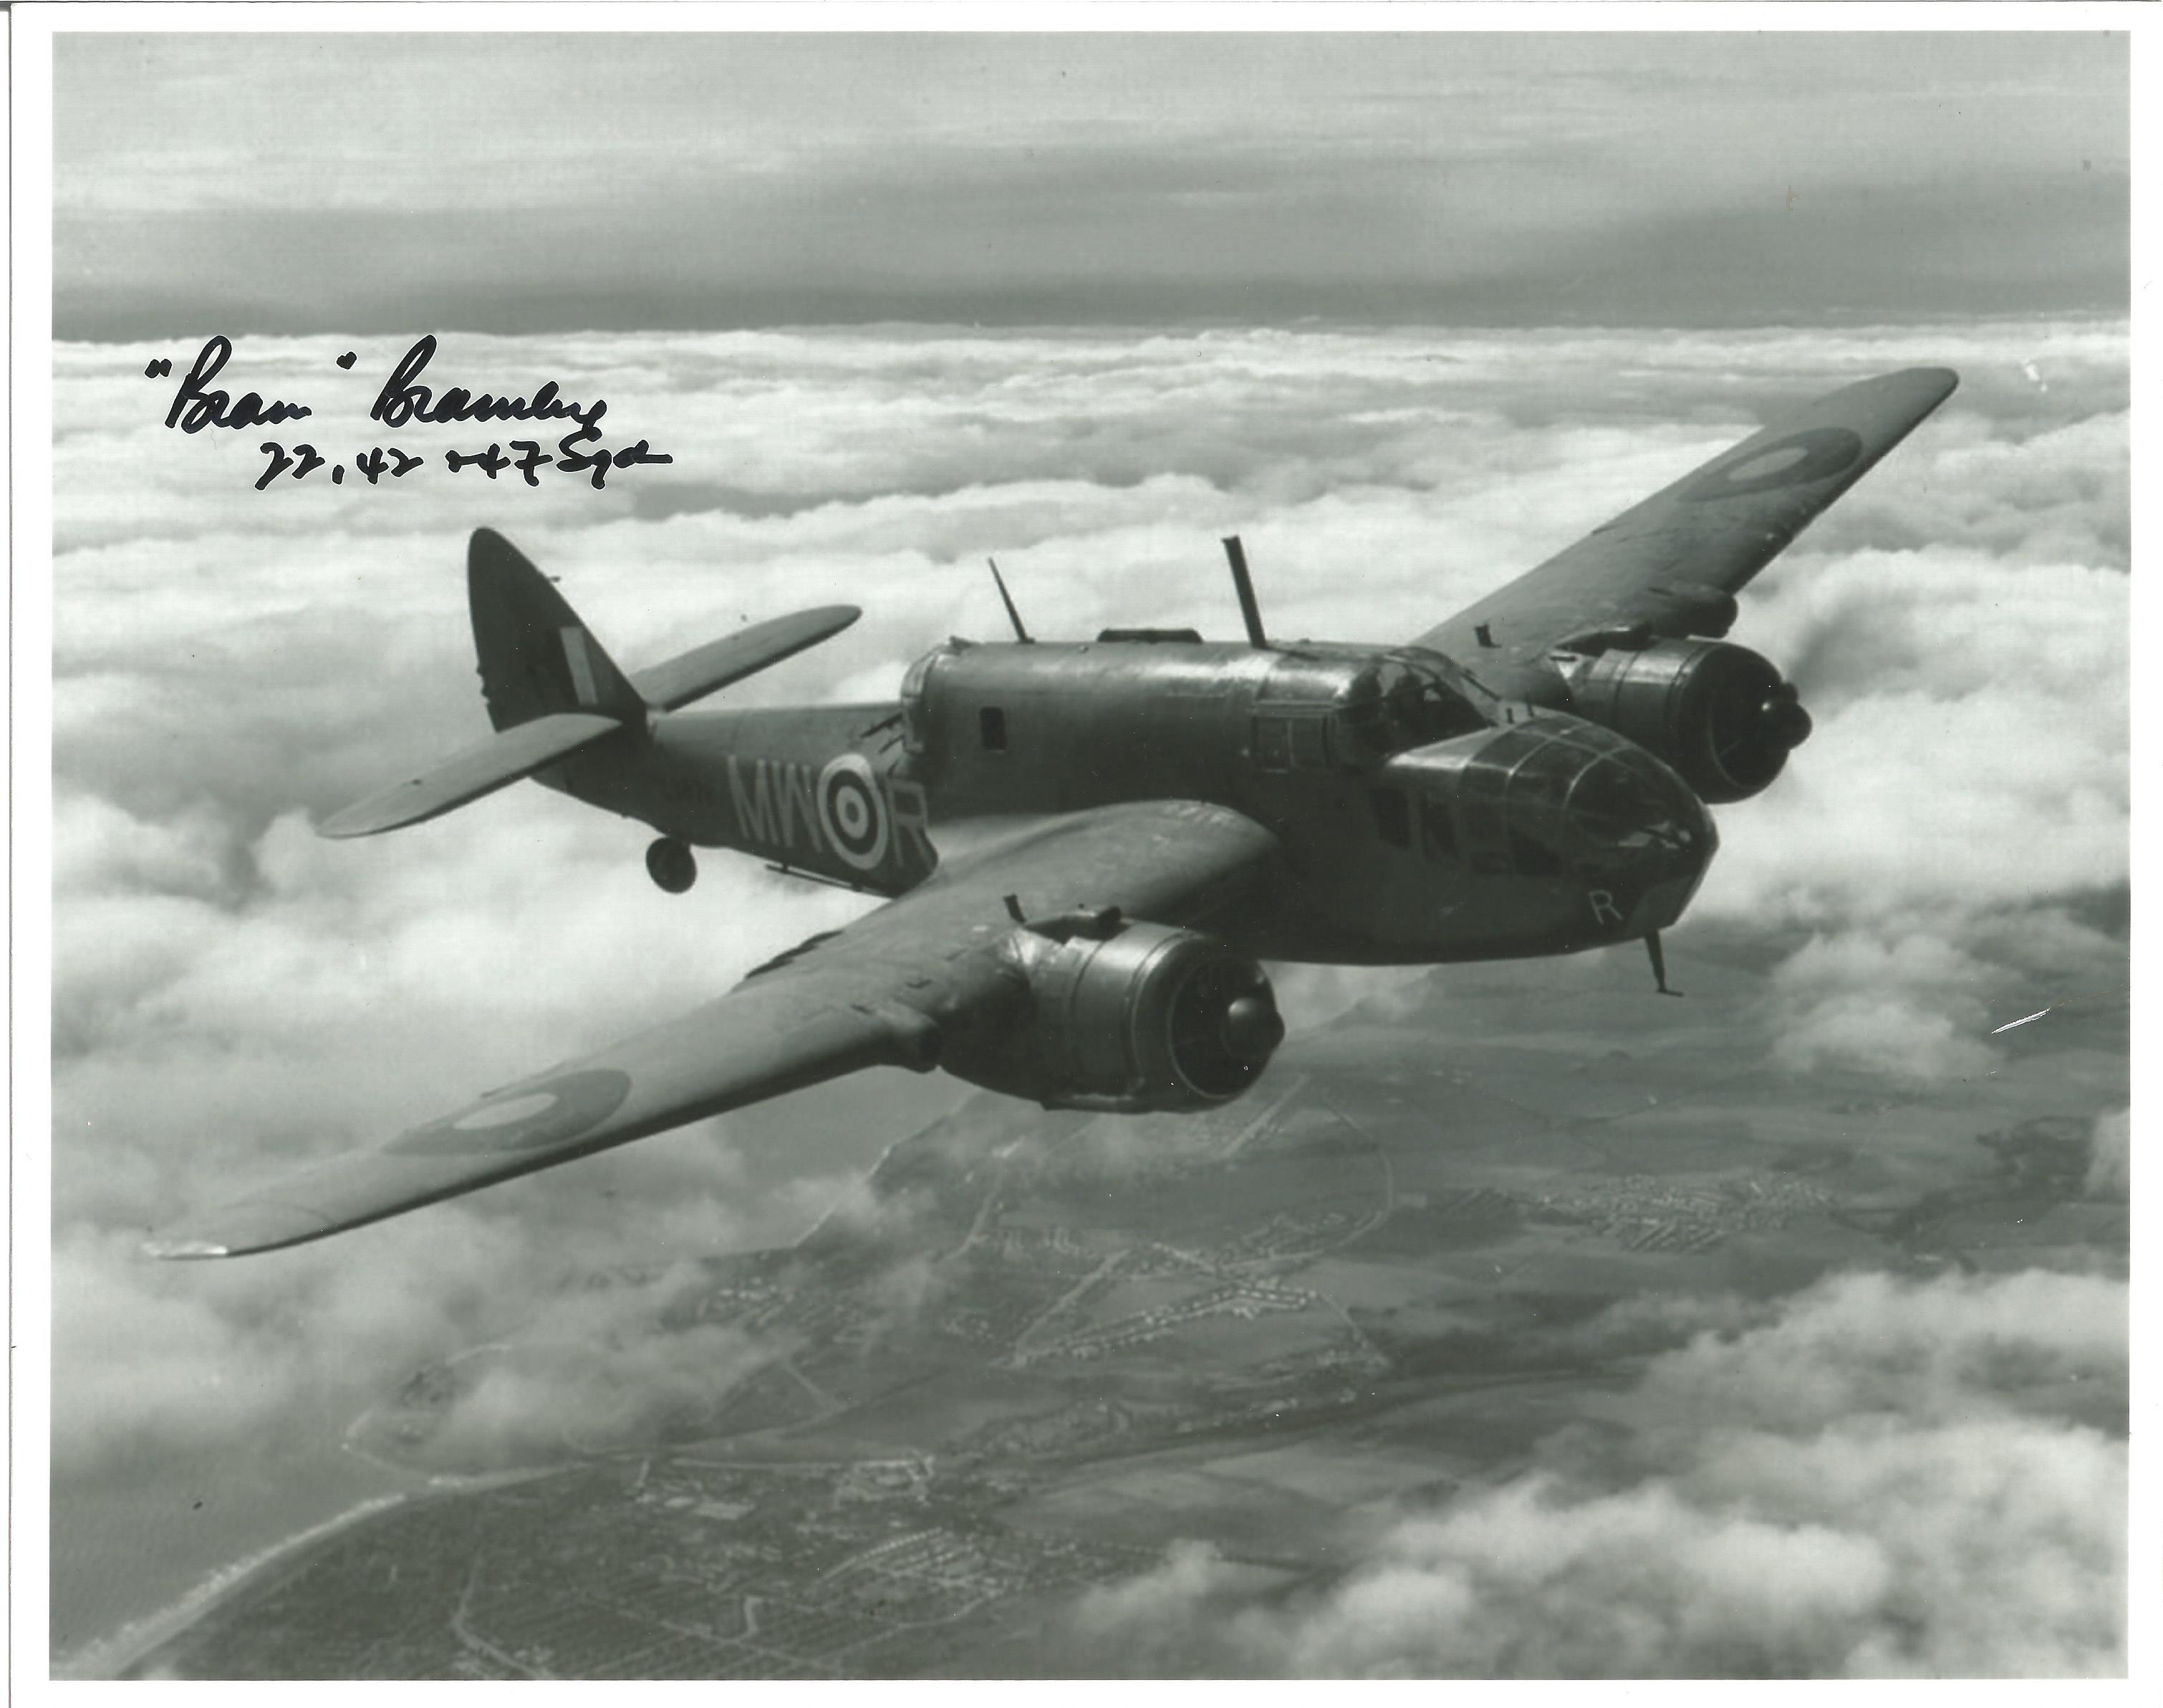 WW2 Flt Lt Brian Bramley 42 sqn SEAC signed 10 x 8 inch b/w photo of bomber in flight. Good